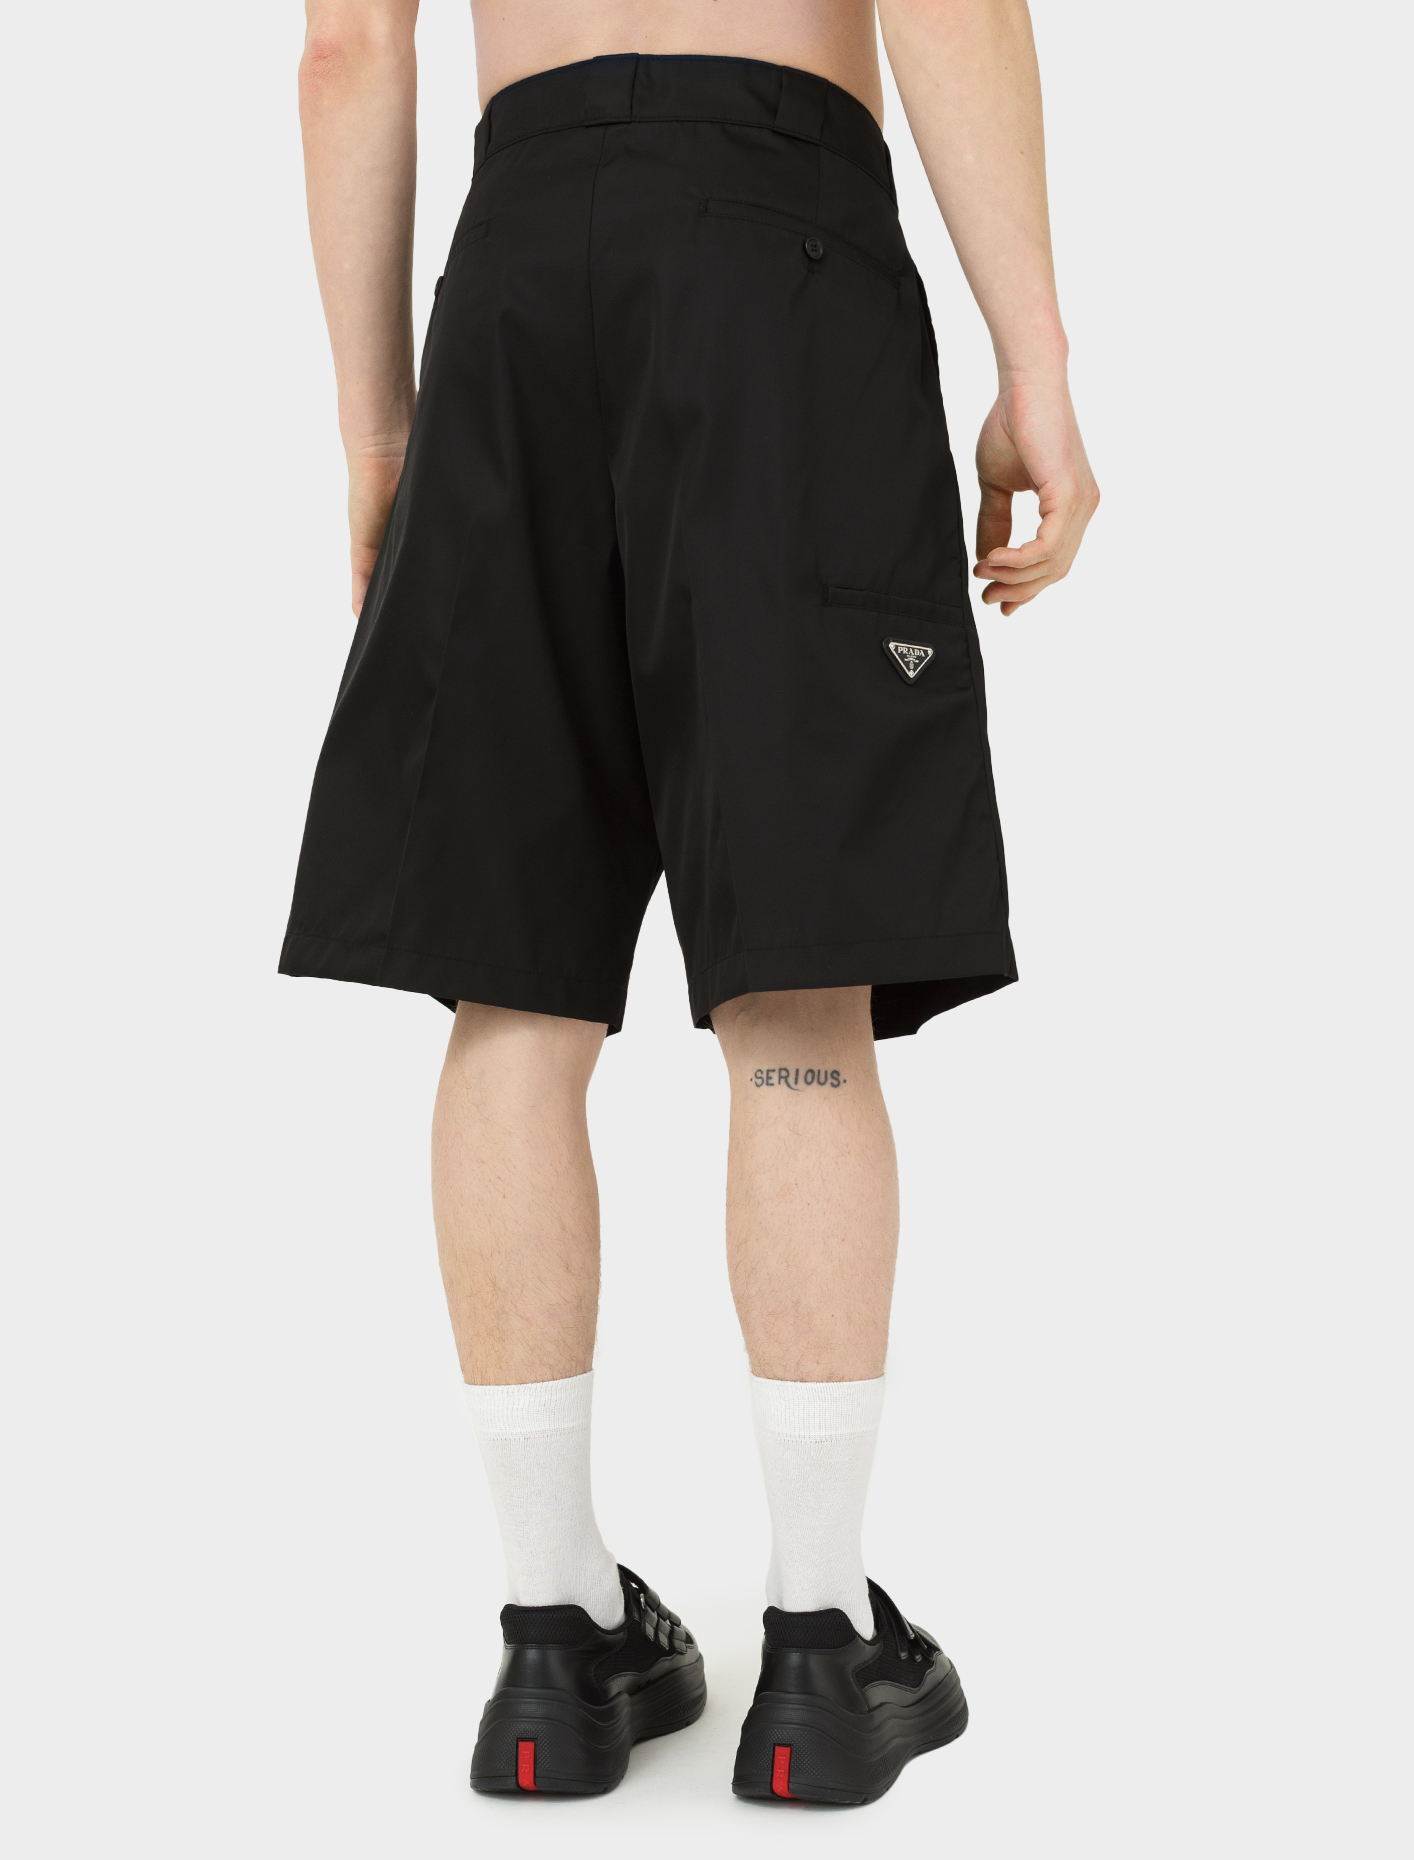 Prada Nylon Shorts in Black | Voo Store Berlin | Worldwide Shipping